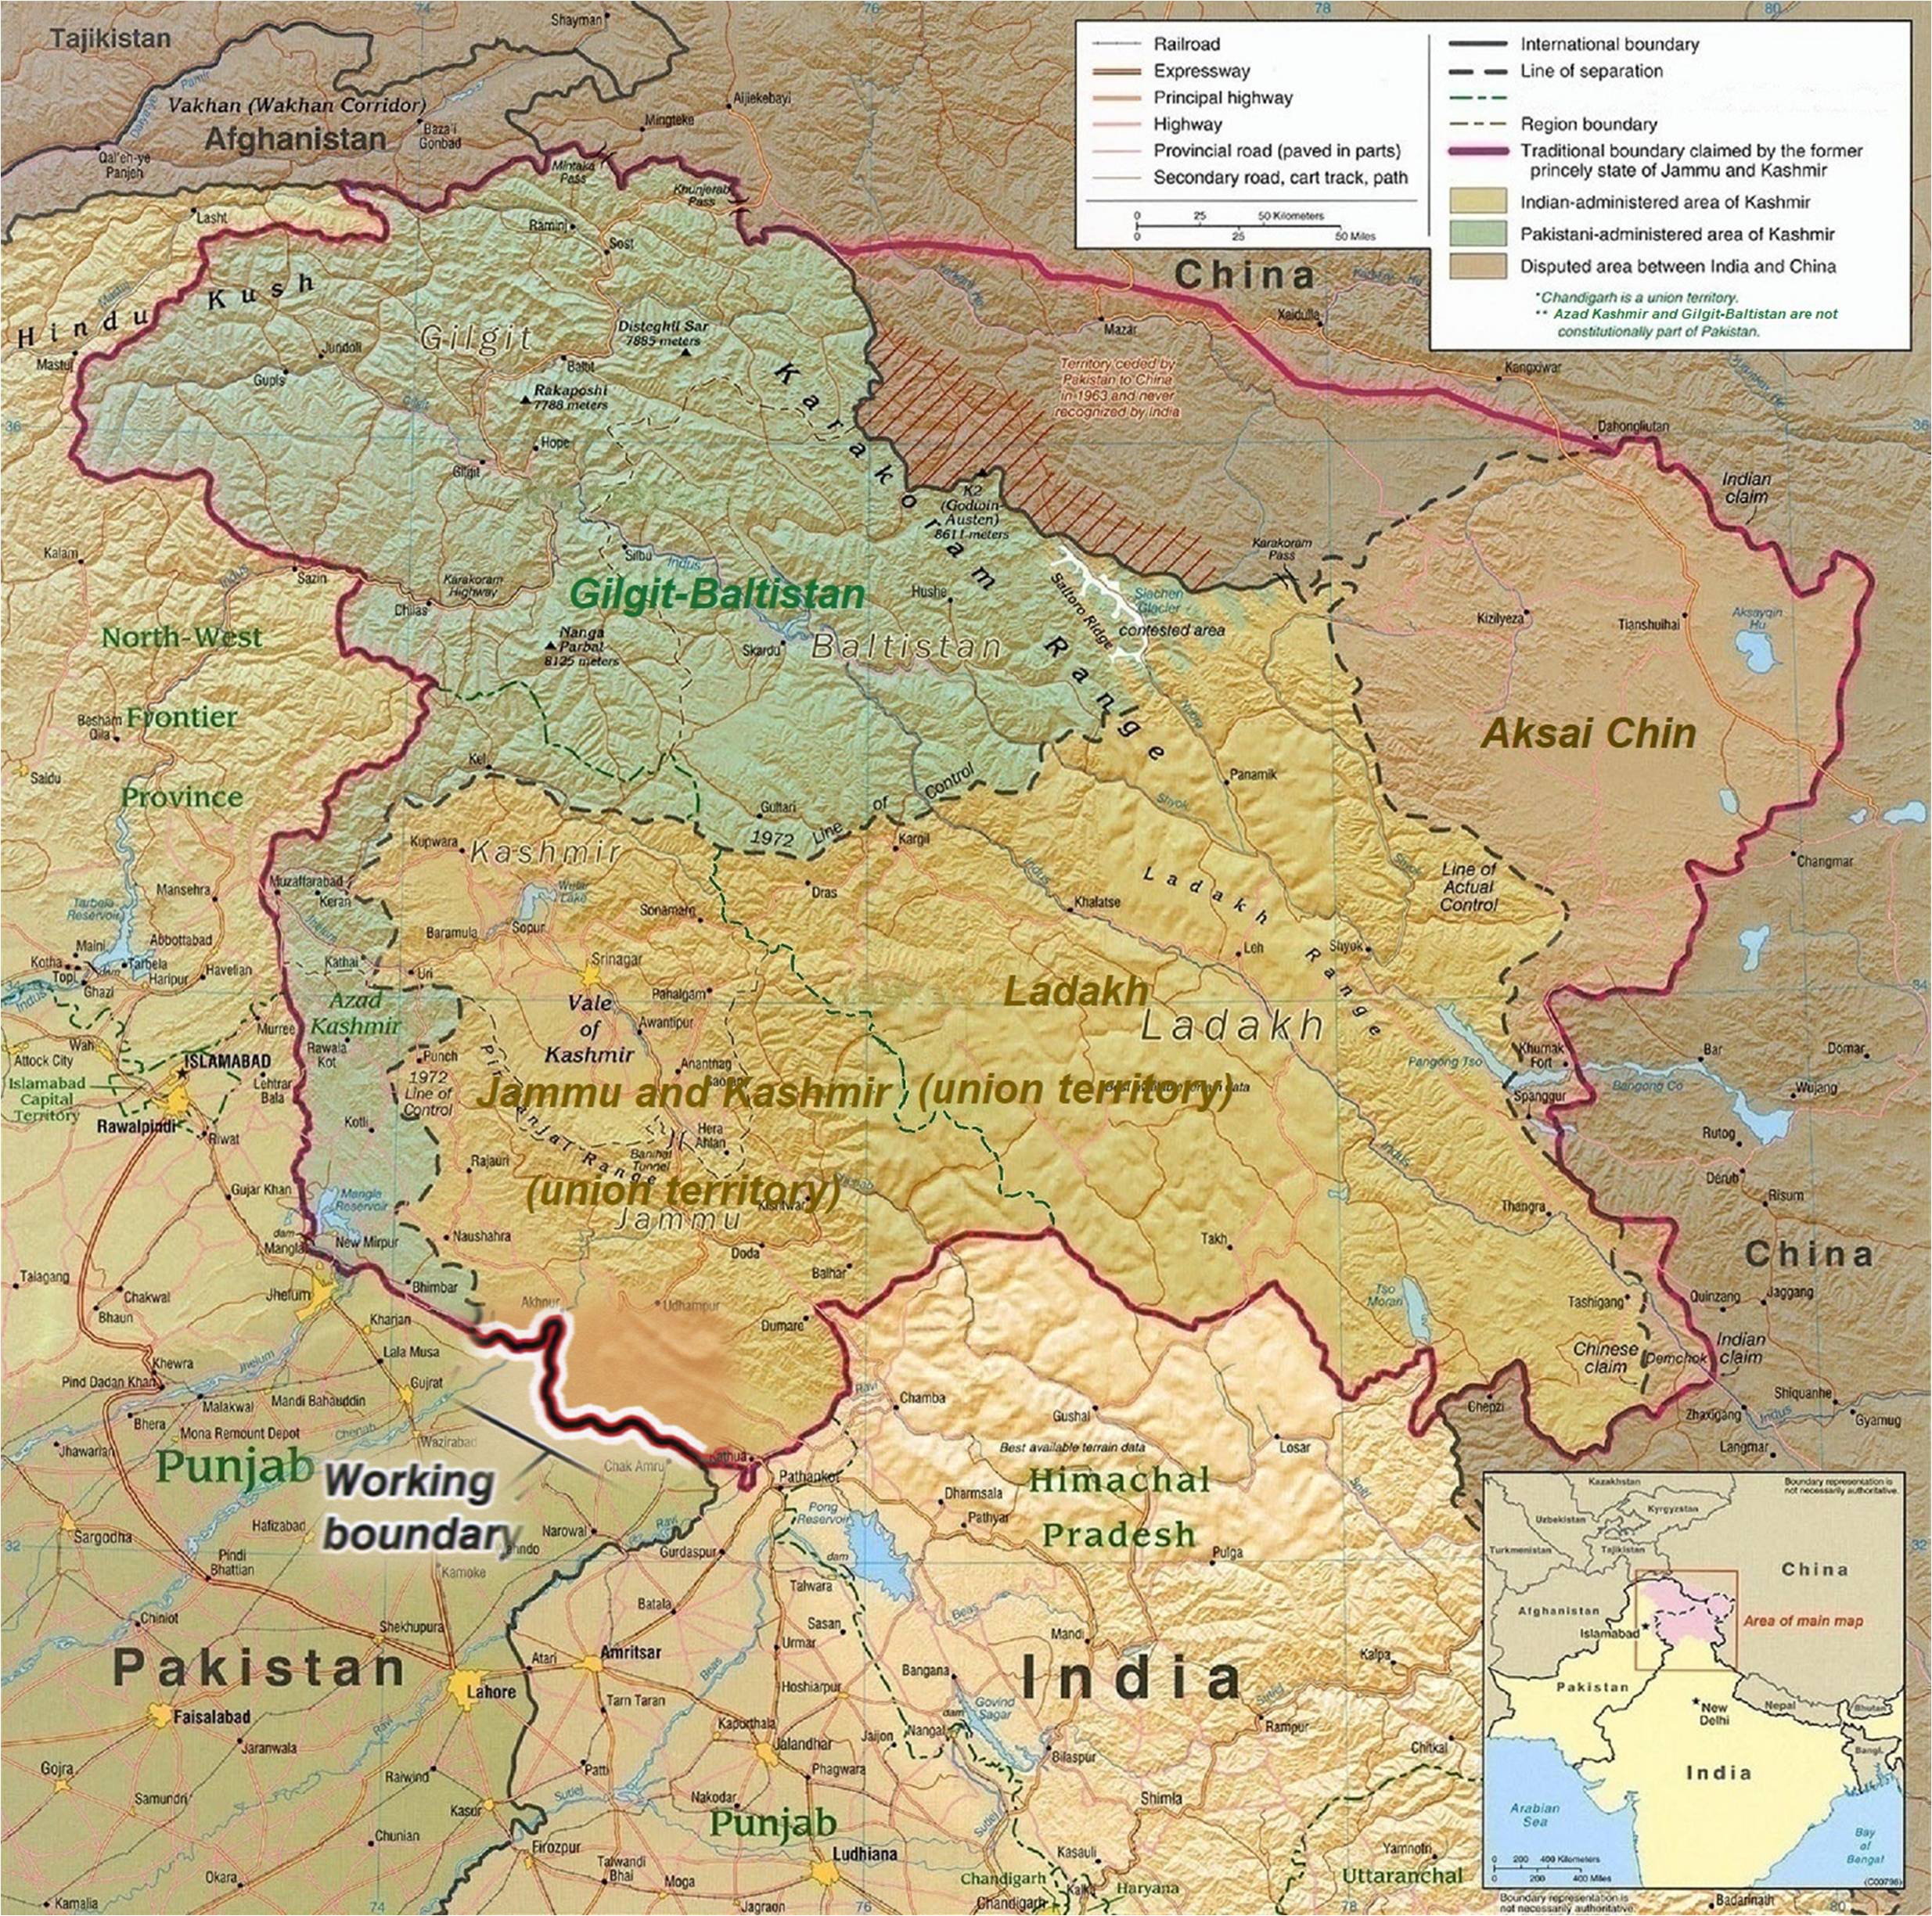 Kashmir_Region_%28working_boundary%29.jpg